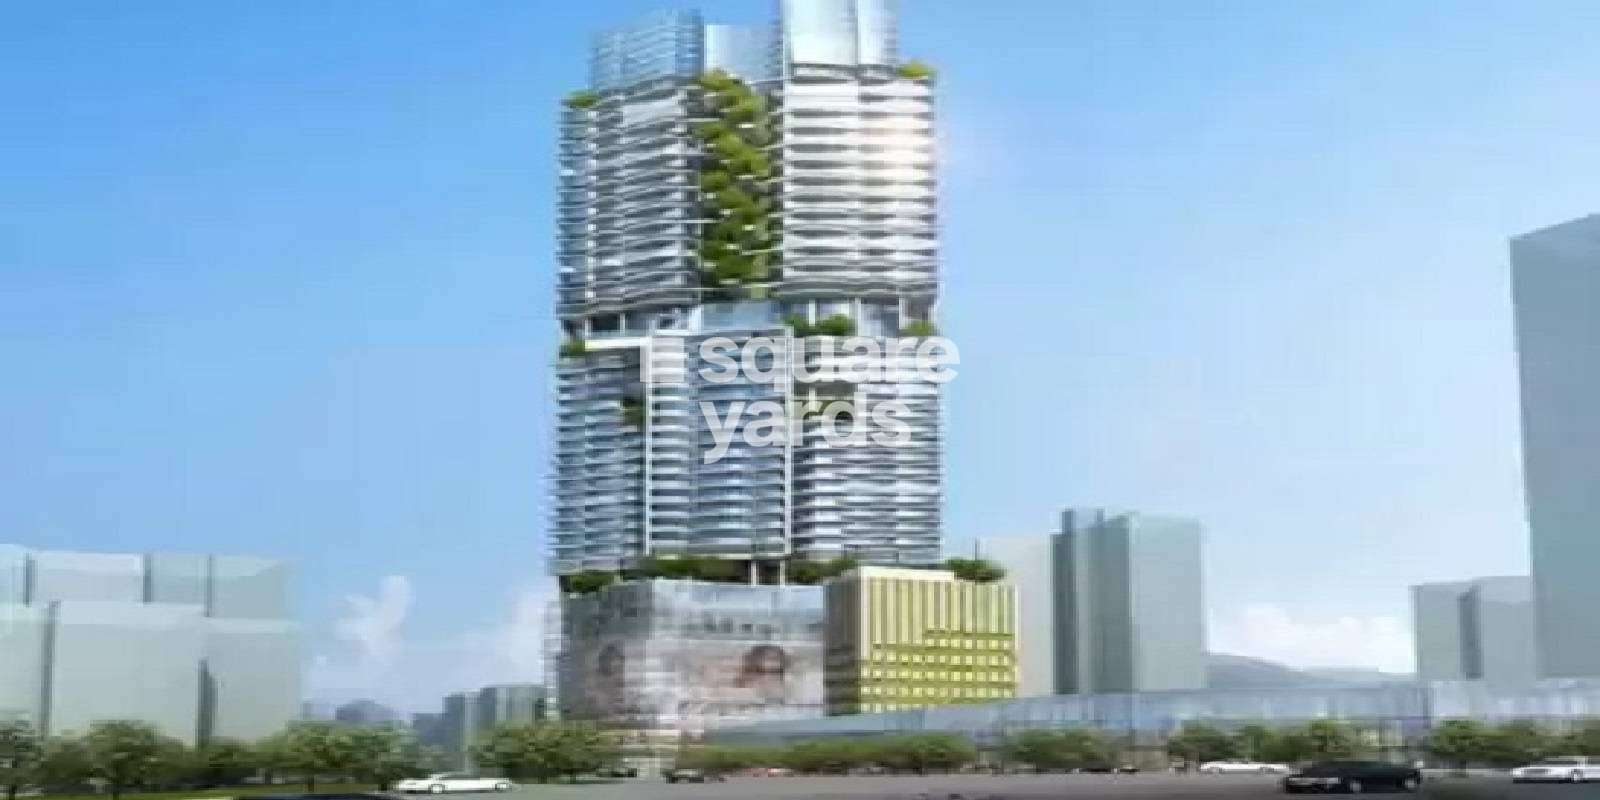 hbs view 360 mumbai project payment plan image1